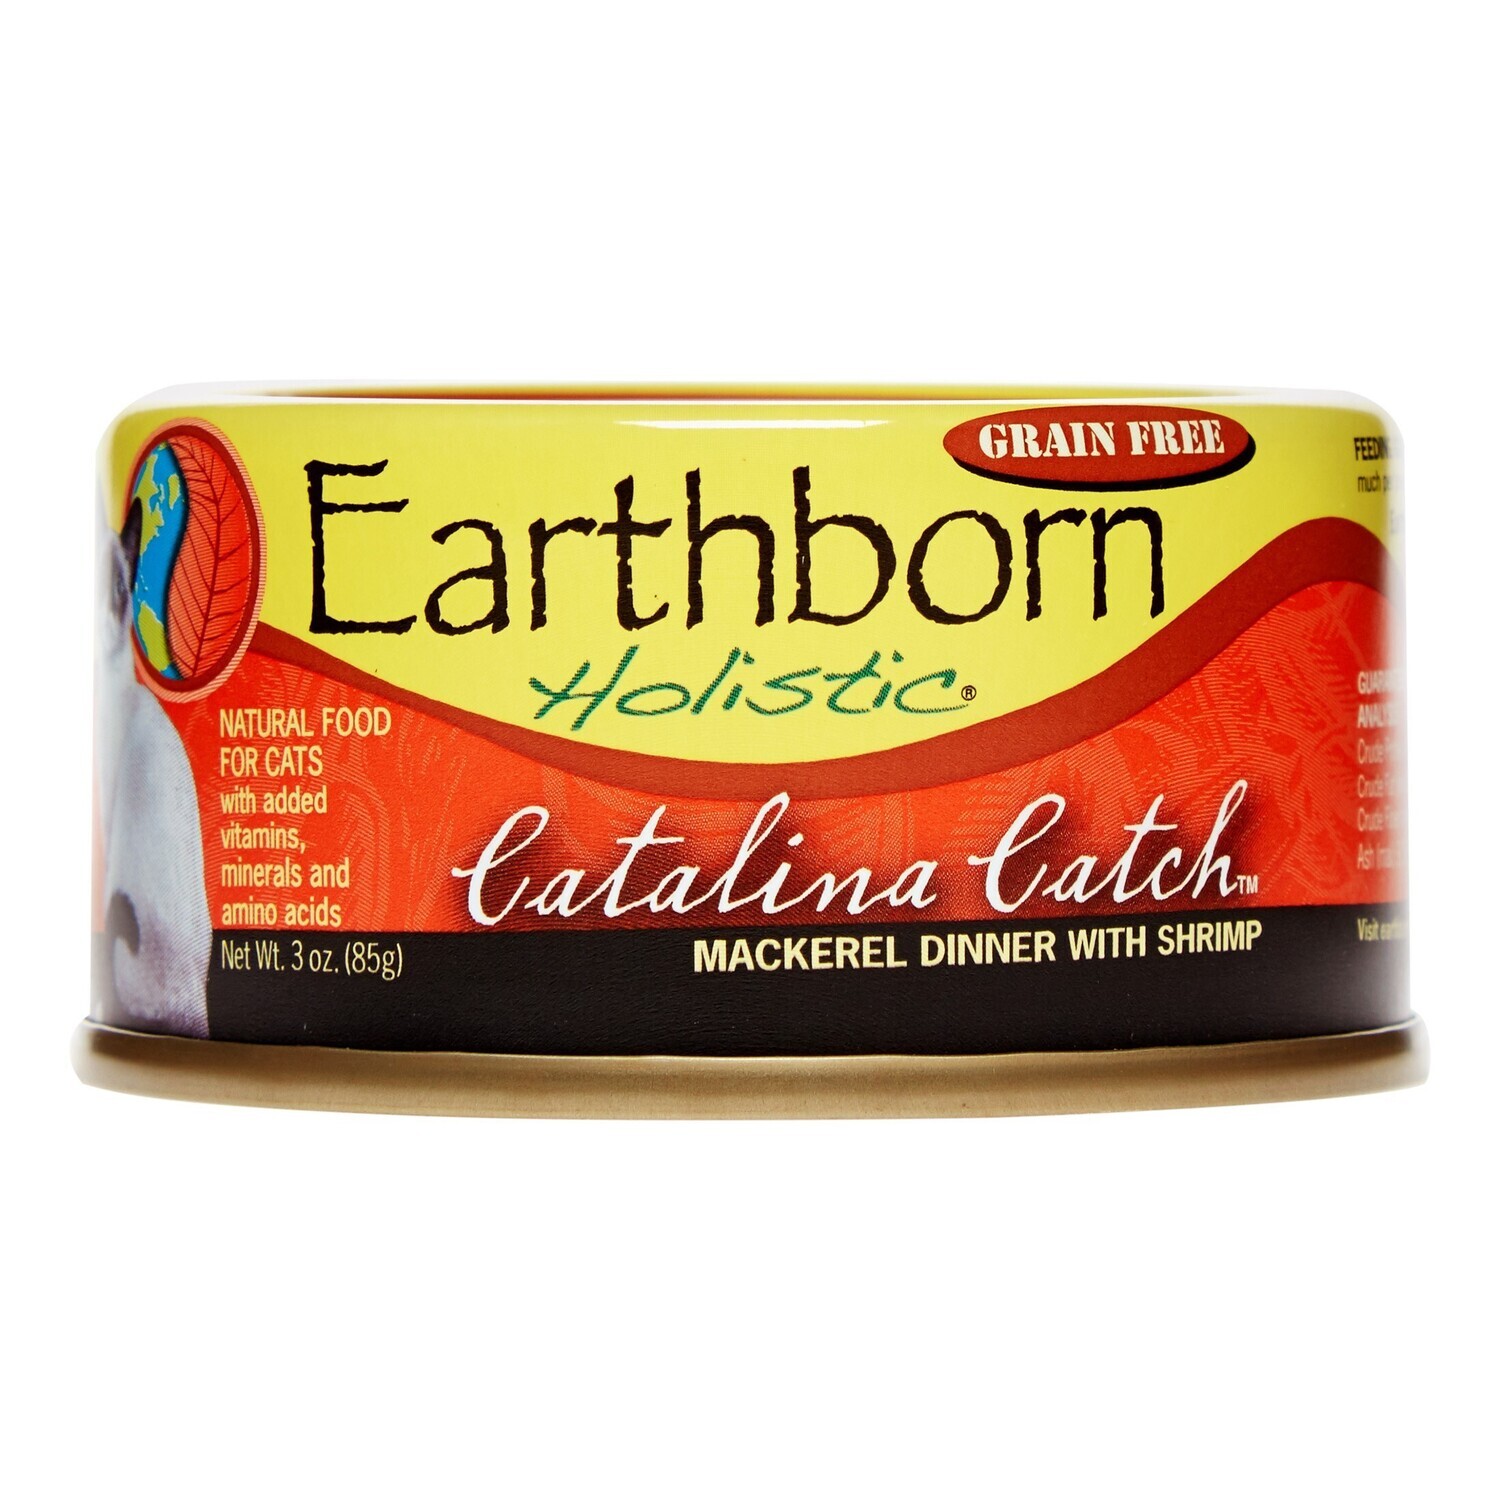 EARTHBORN CAT GRAIN FREE CATALINA CATCH 3OZ